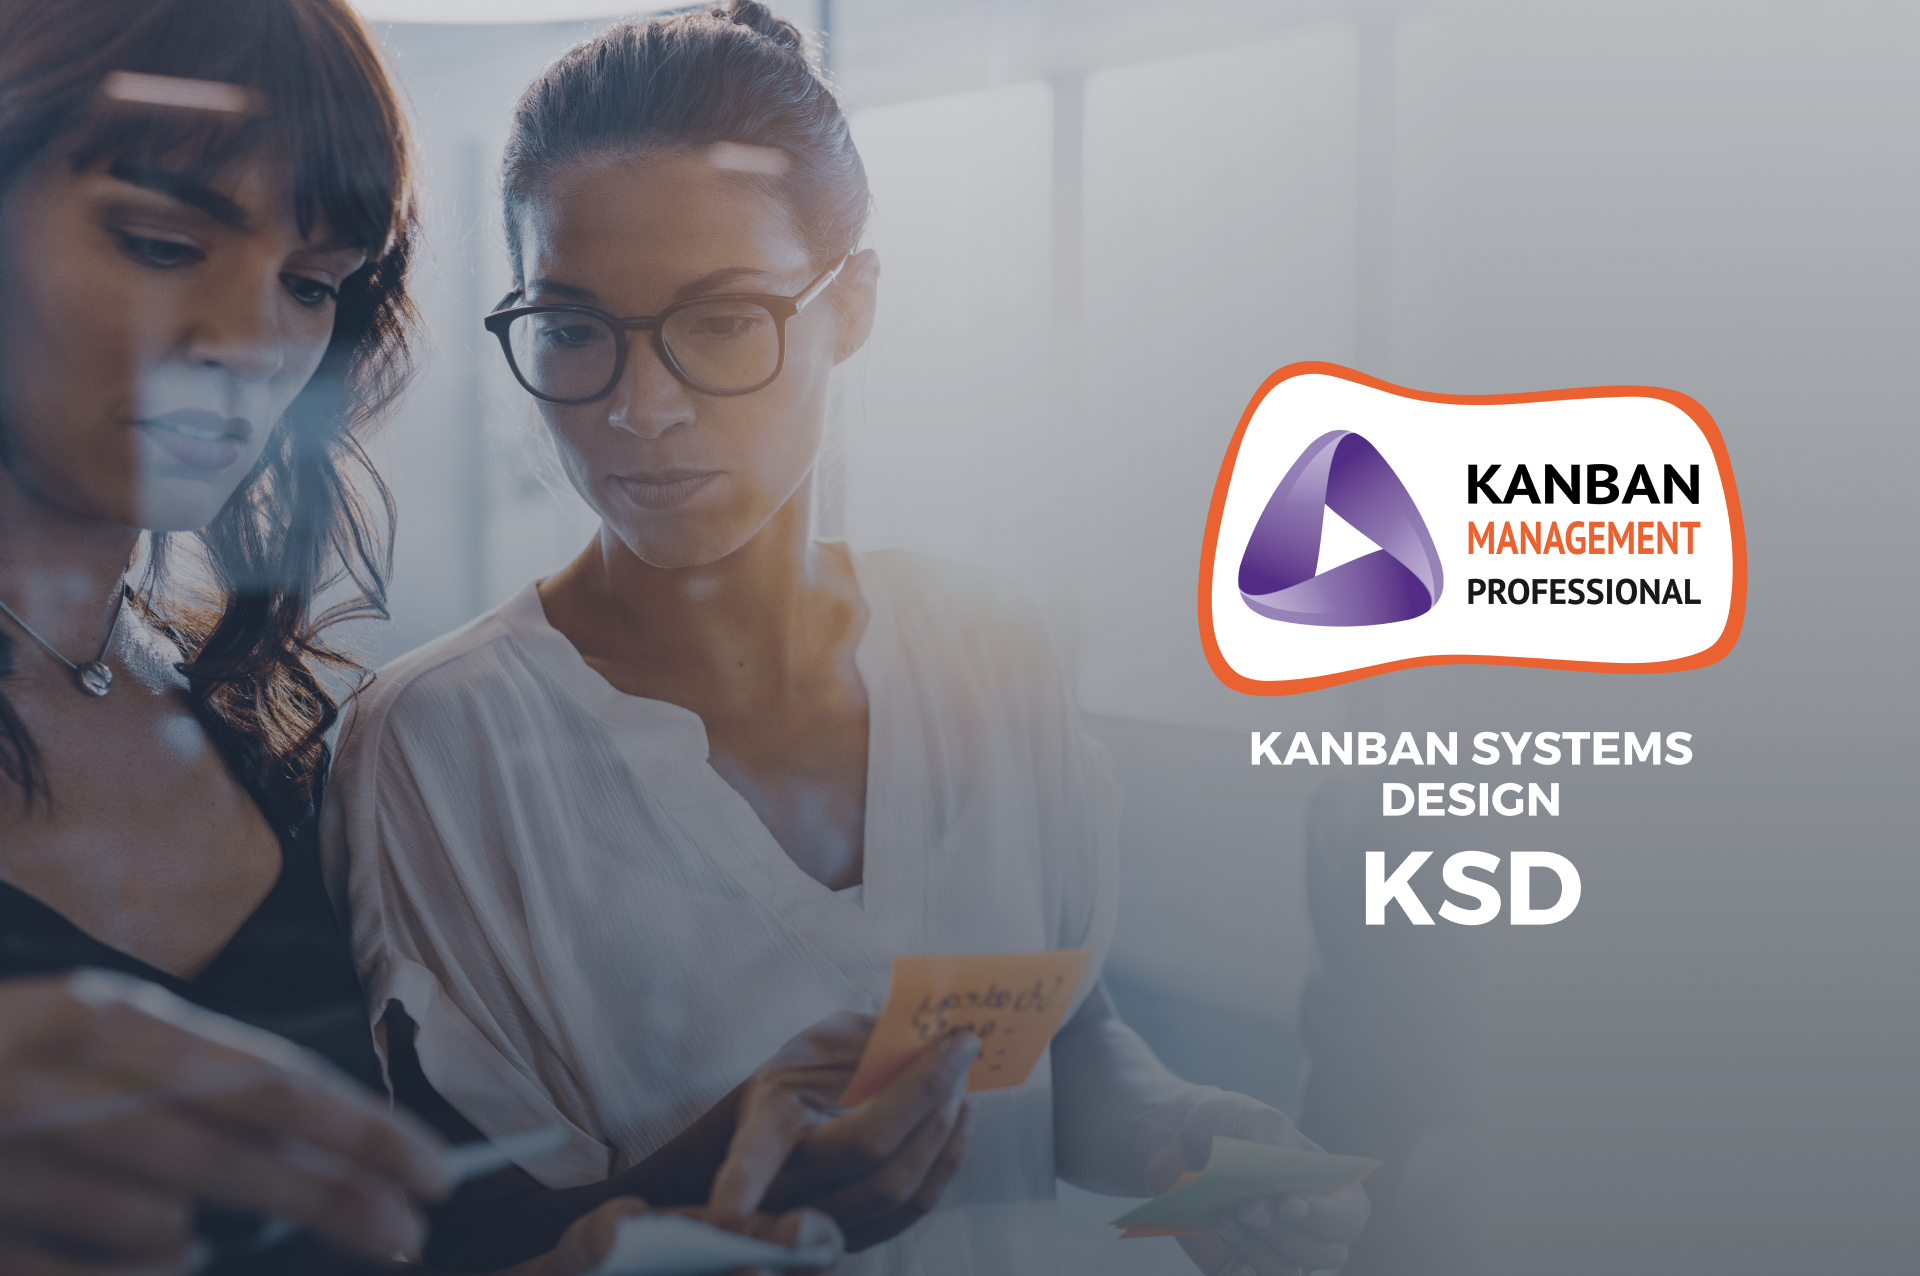 KSD - Kanban System Design